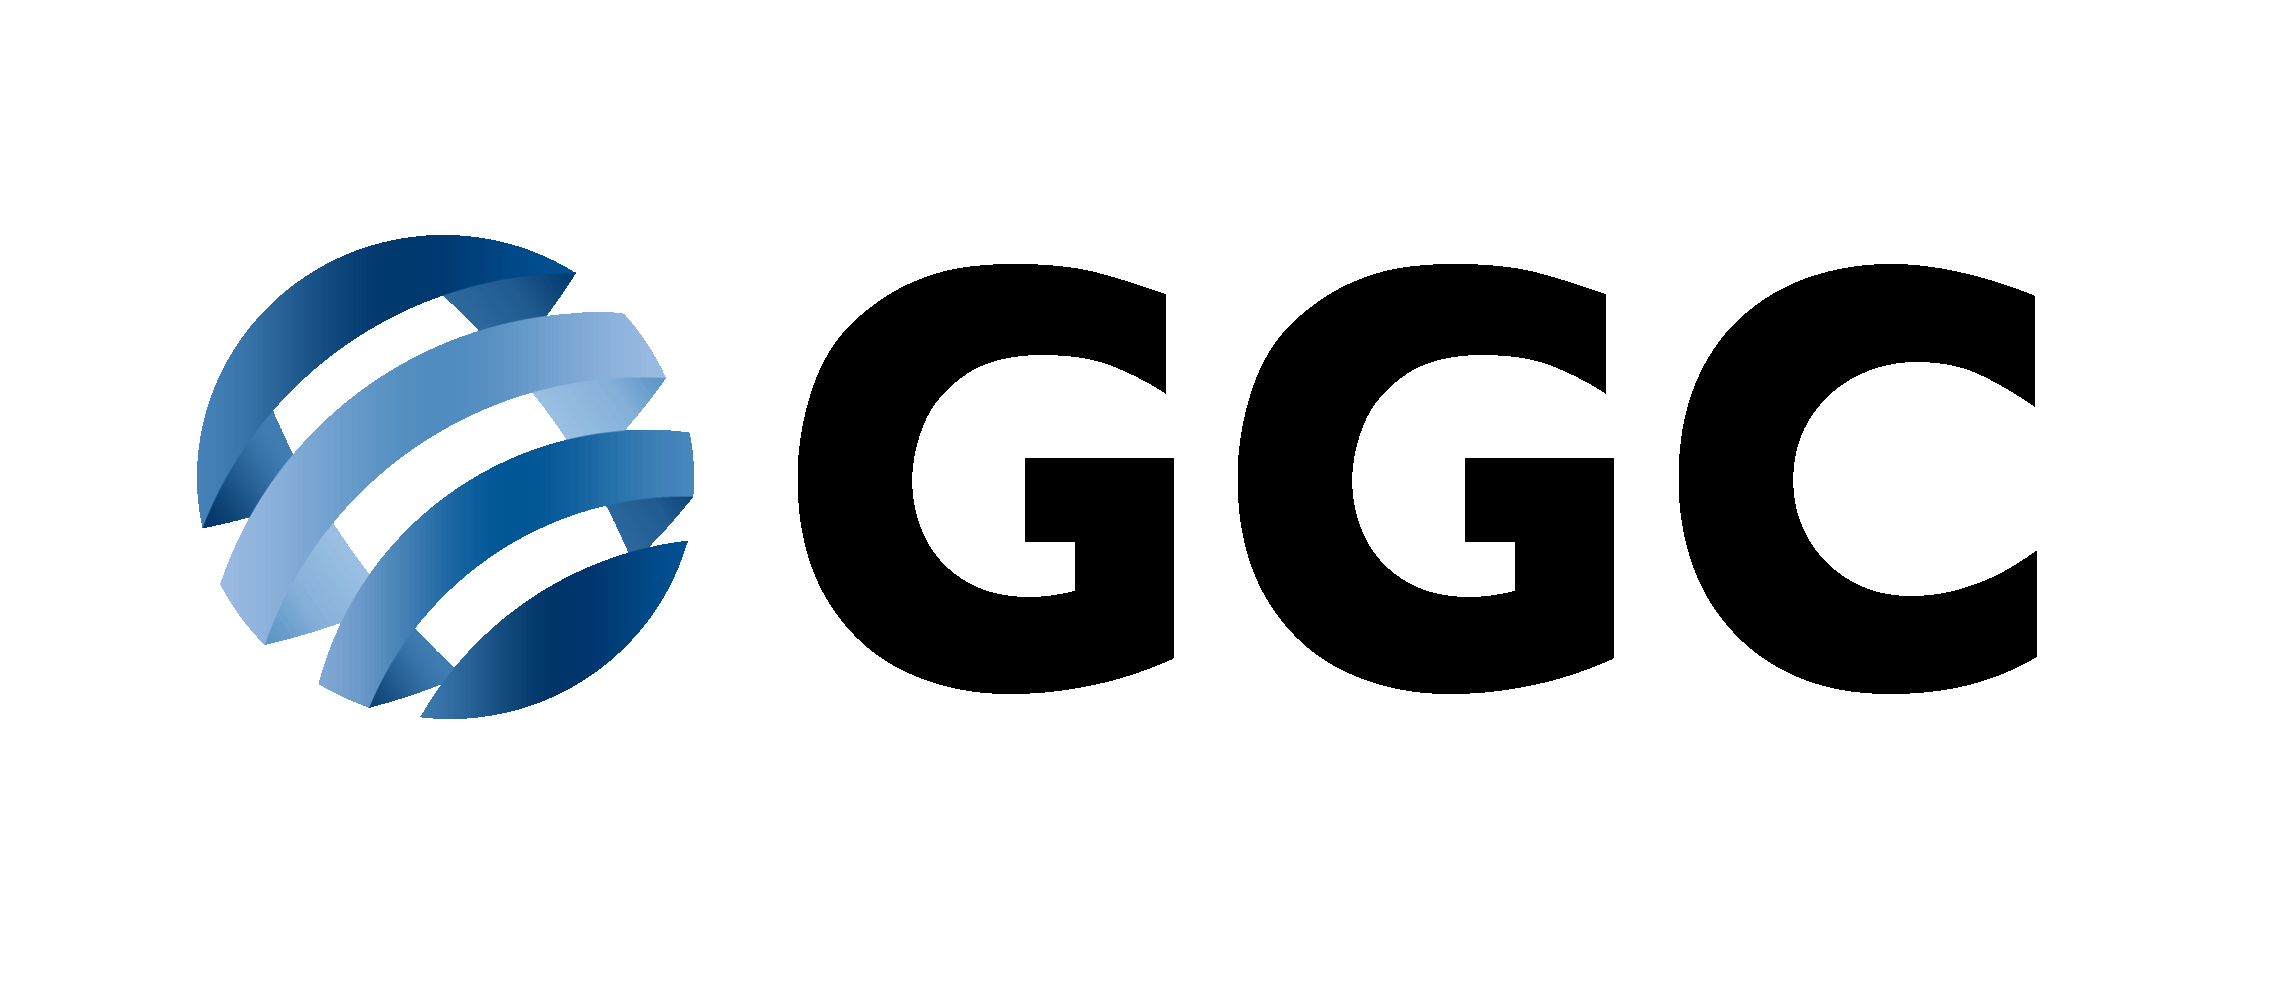 George Garabedian Co. Ltd.